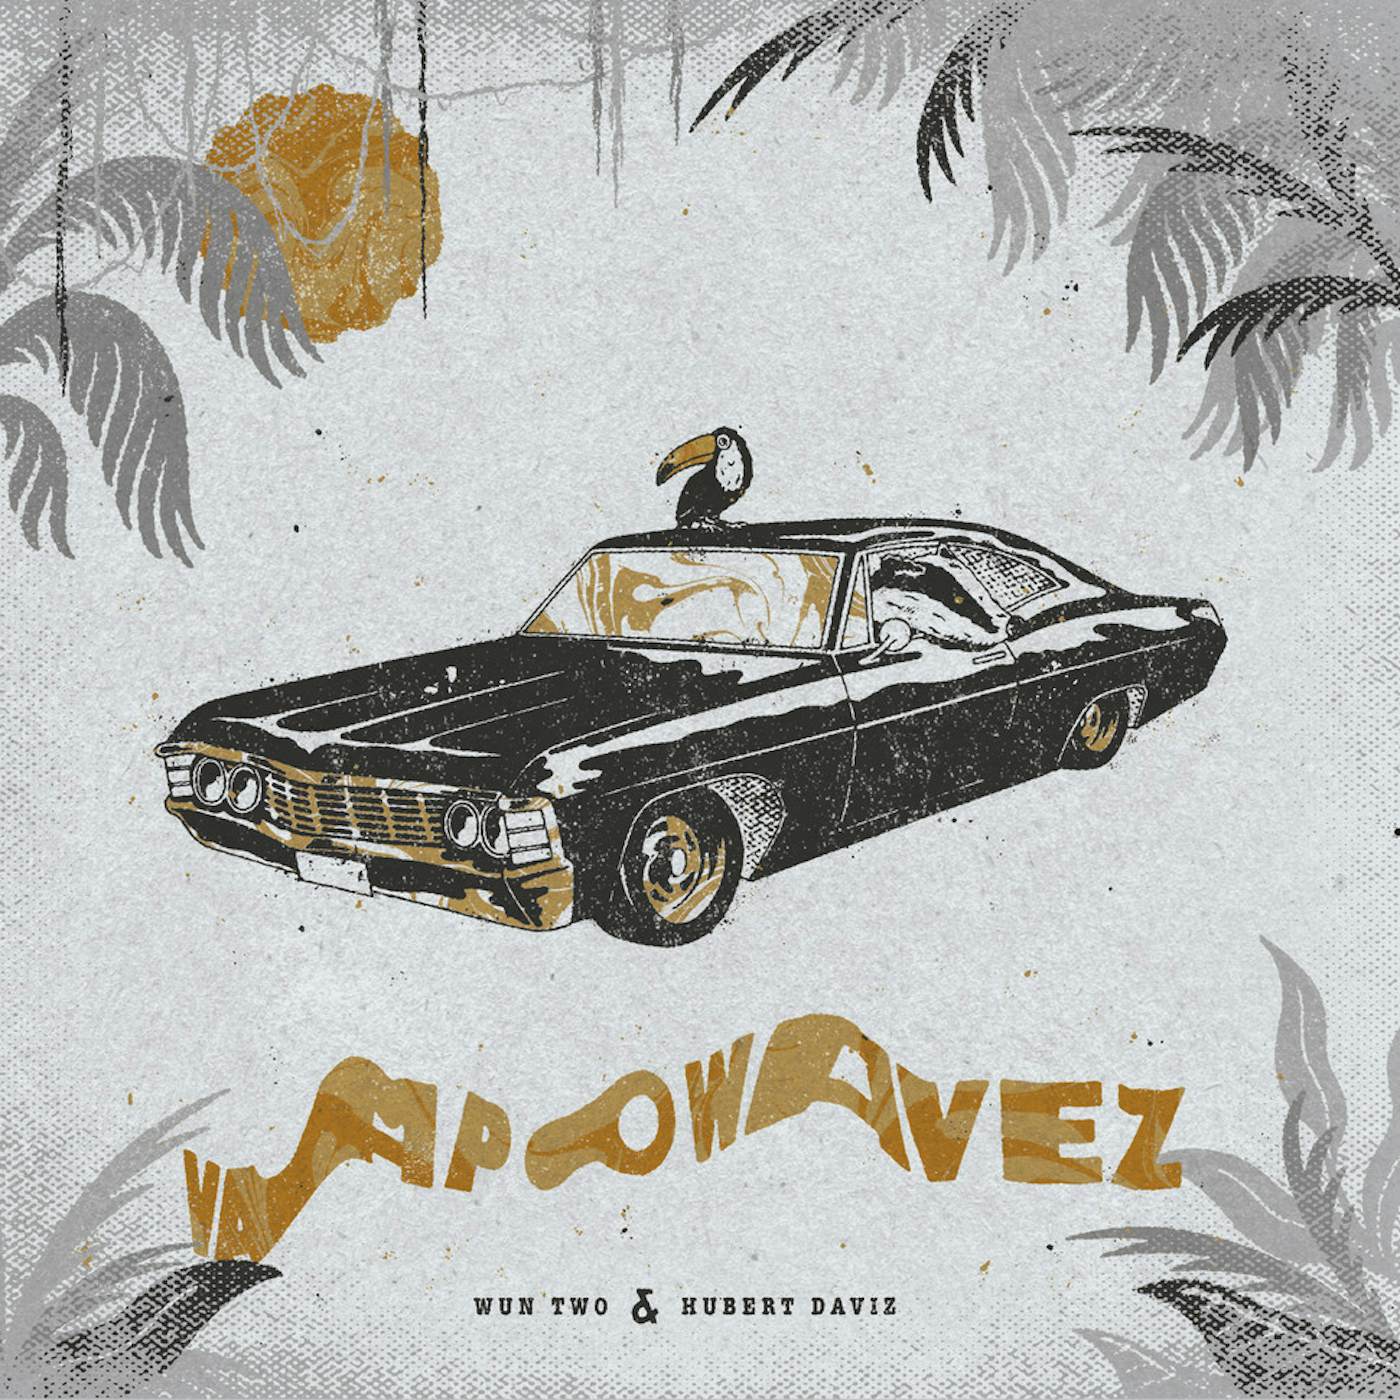 Wun Two VAPORWAVEZ Vinyl Record